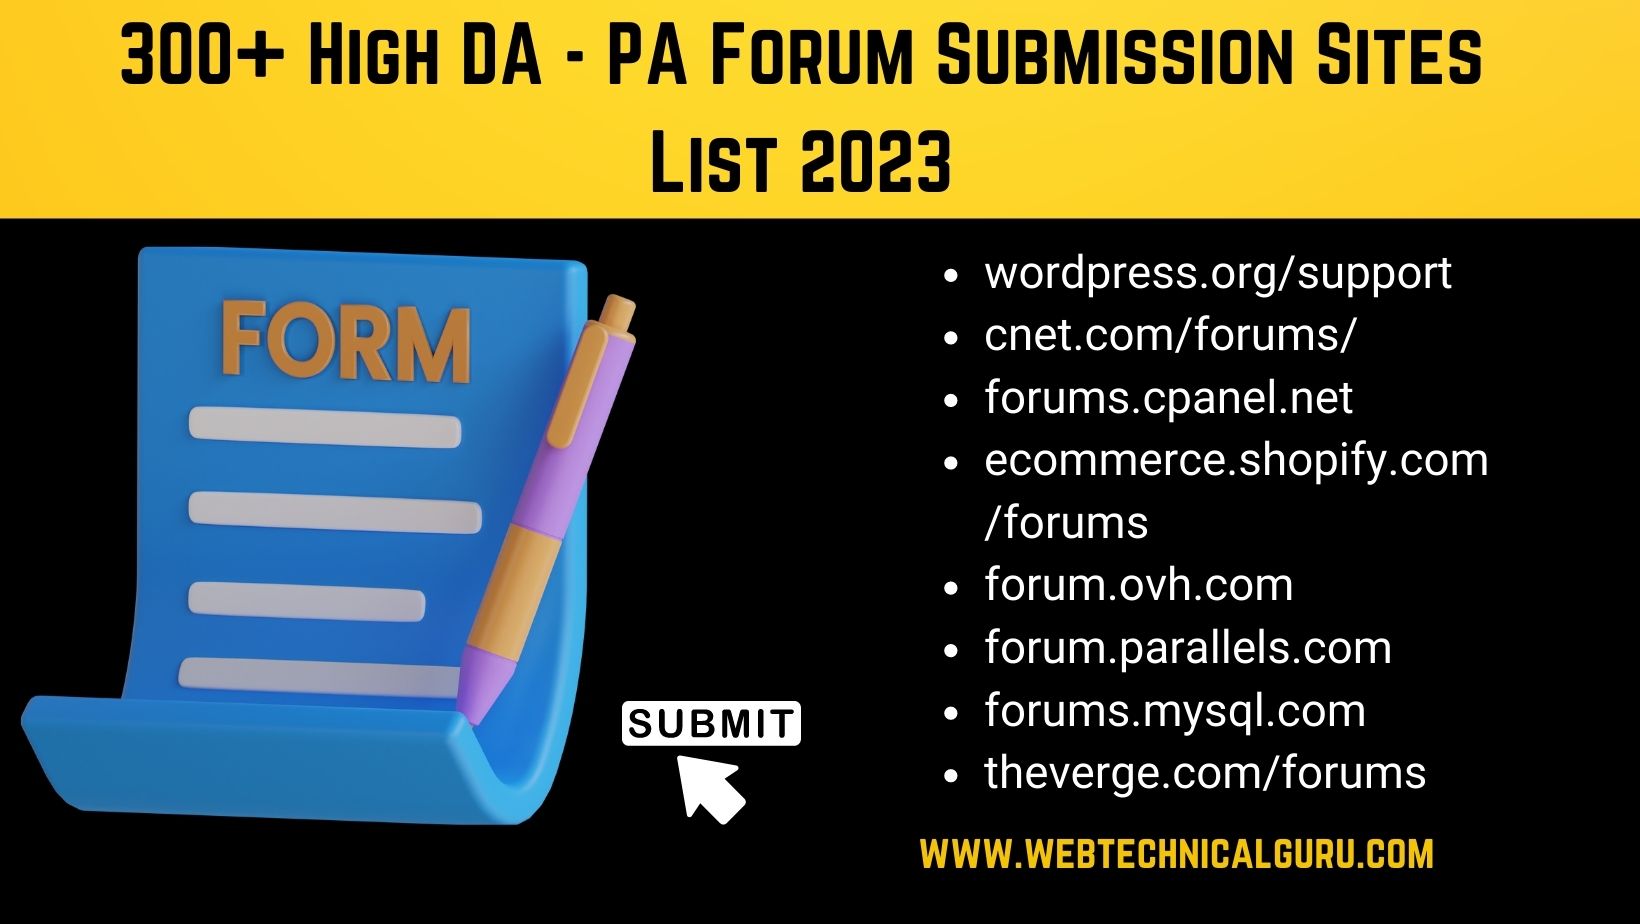 High DA PA Forum Submission Sites List